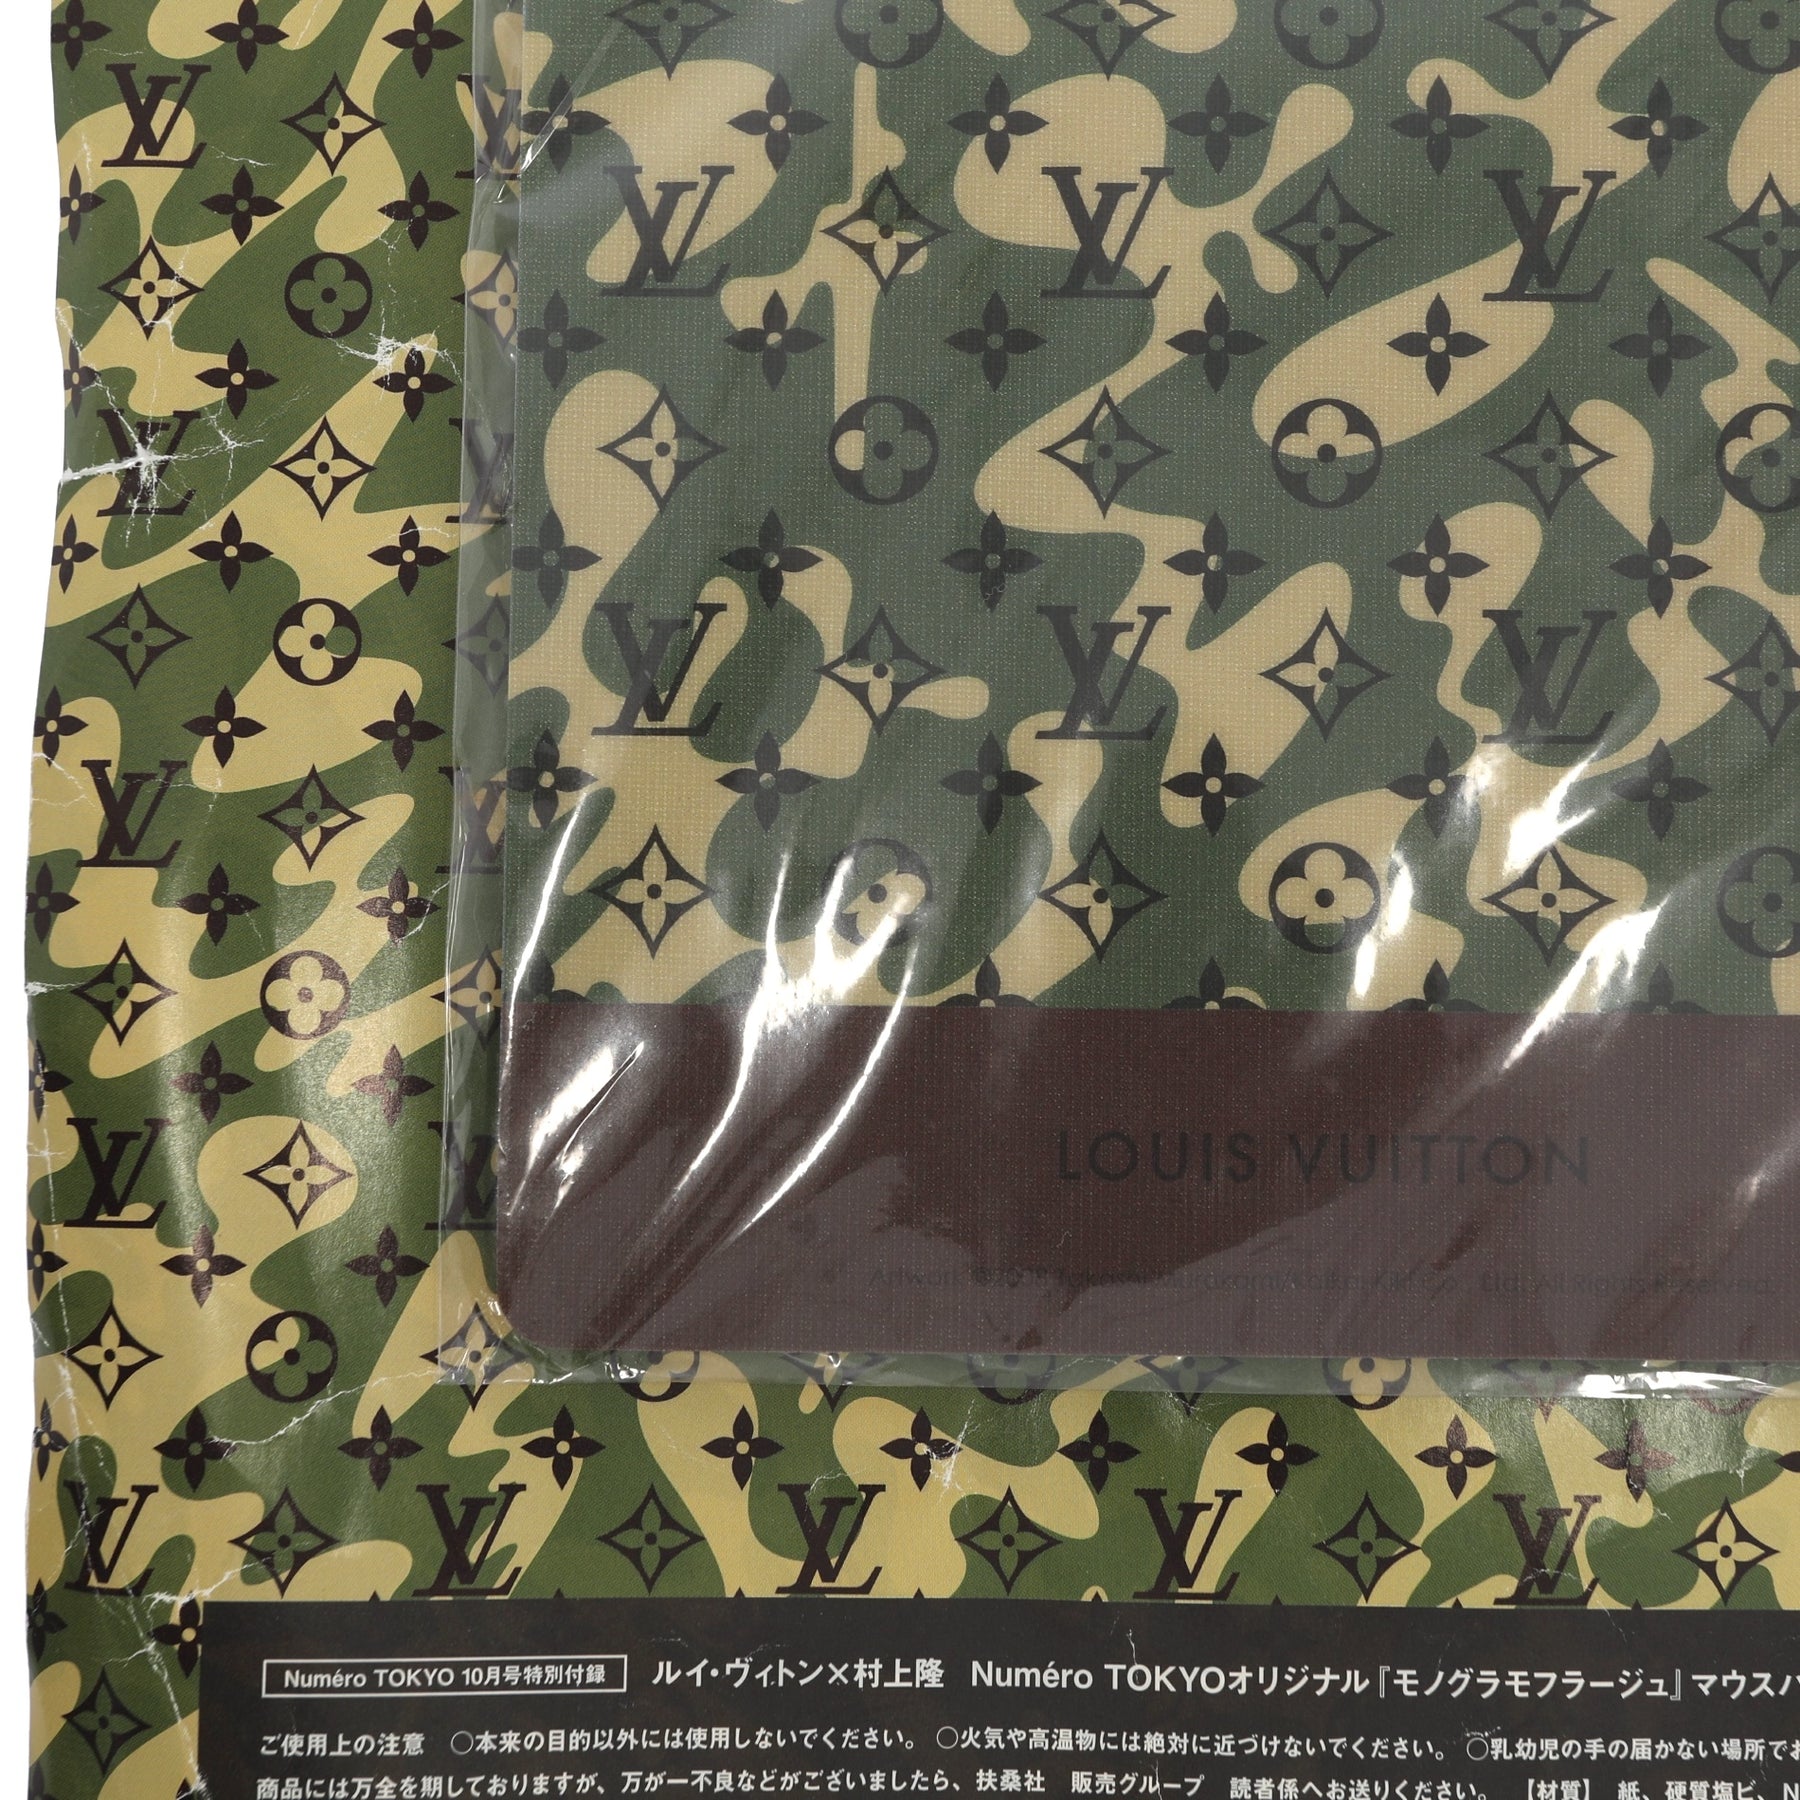 Limited Edition Louis Vuitton x Takashi Murakami Camo Mouse Pad